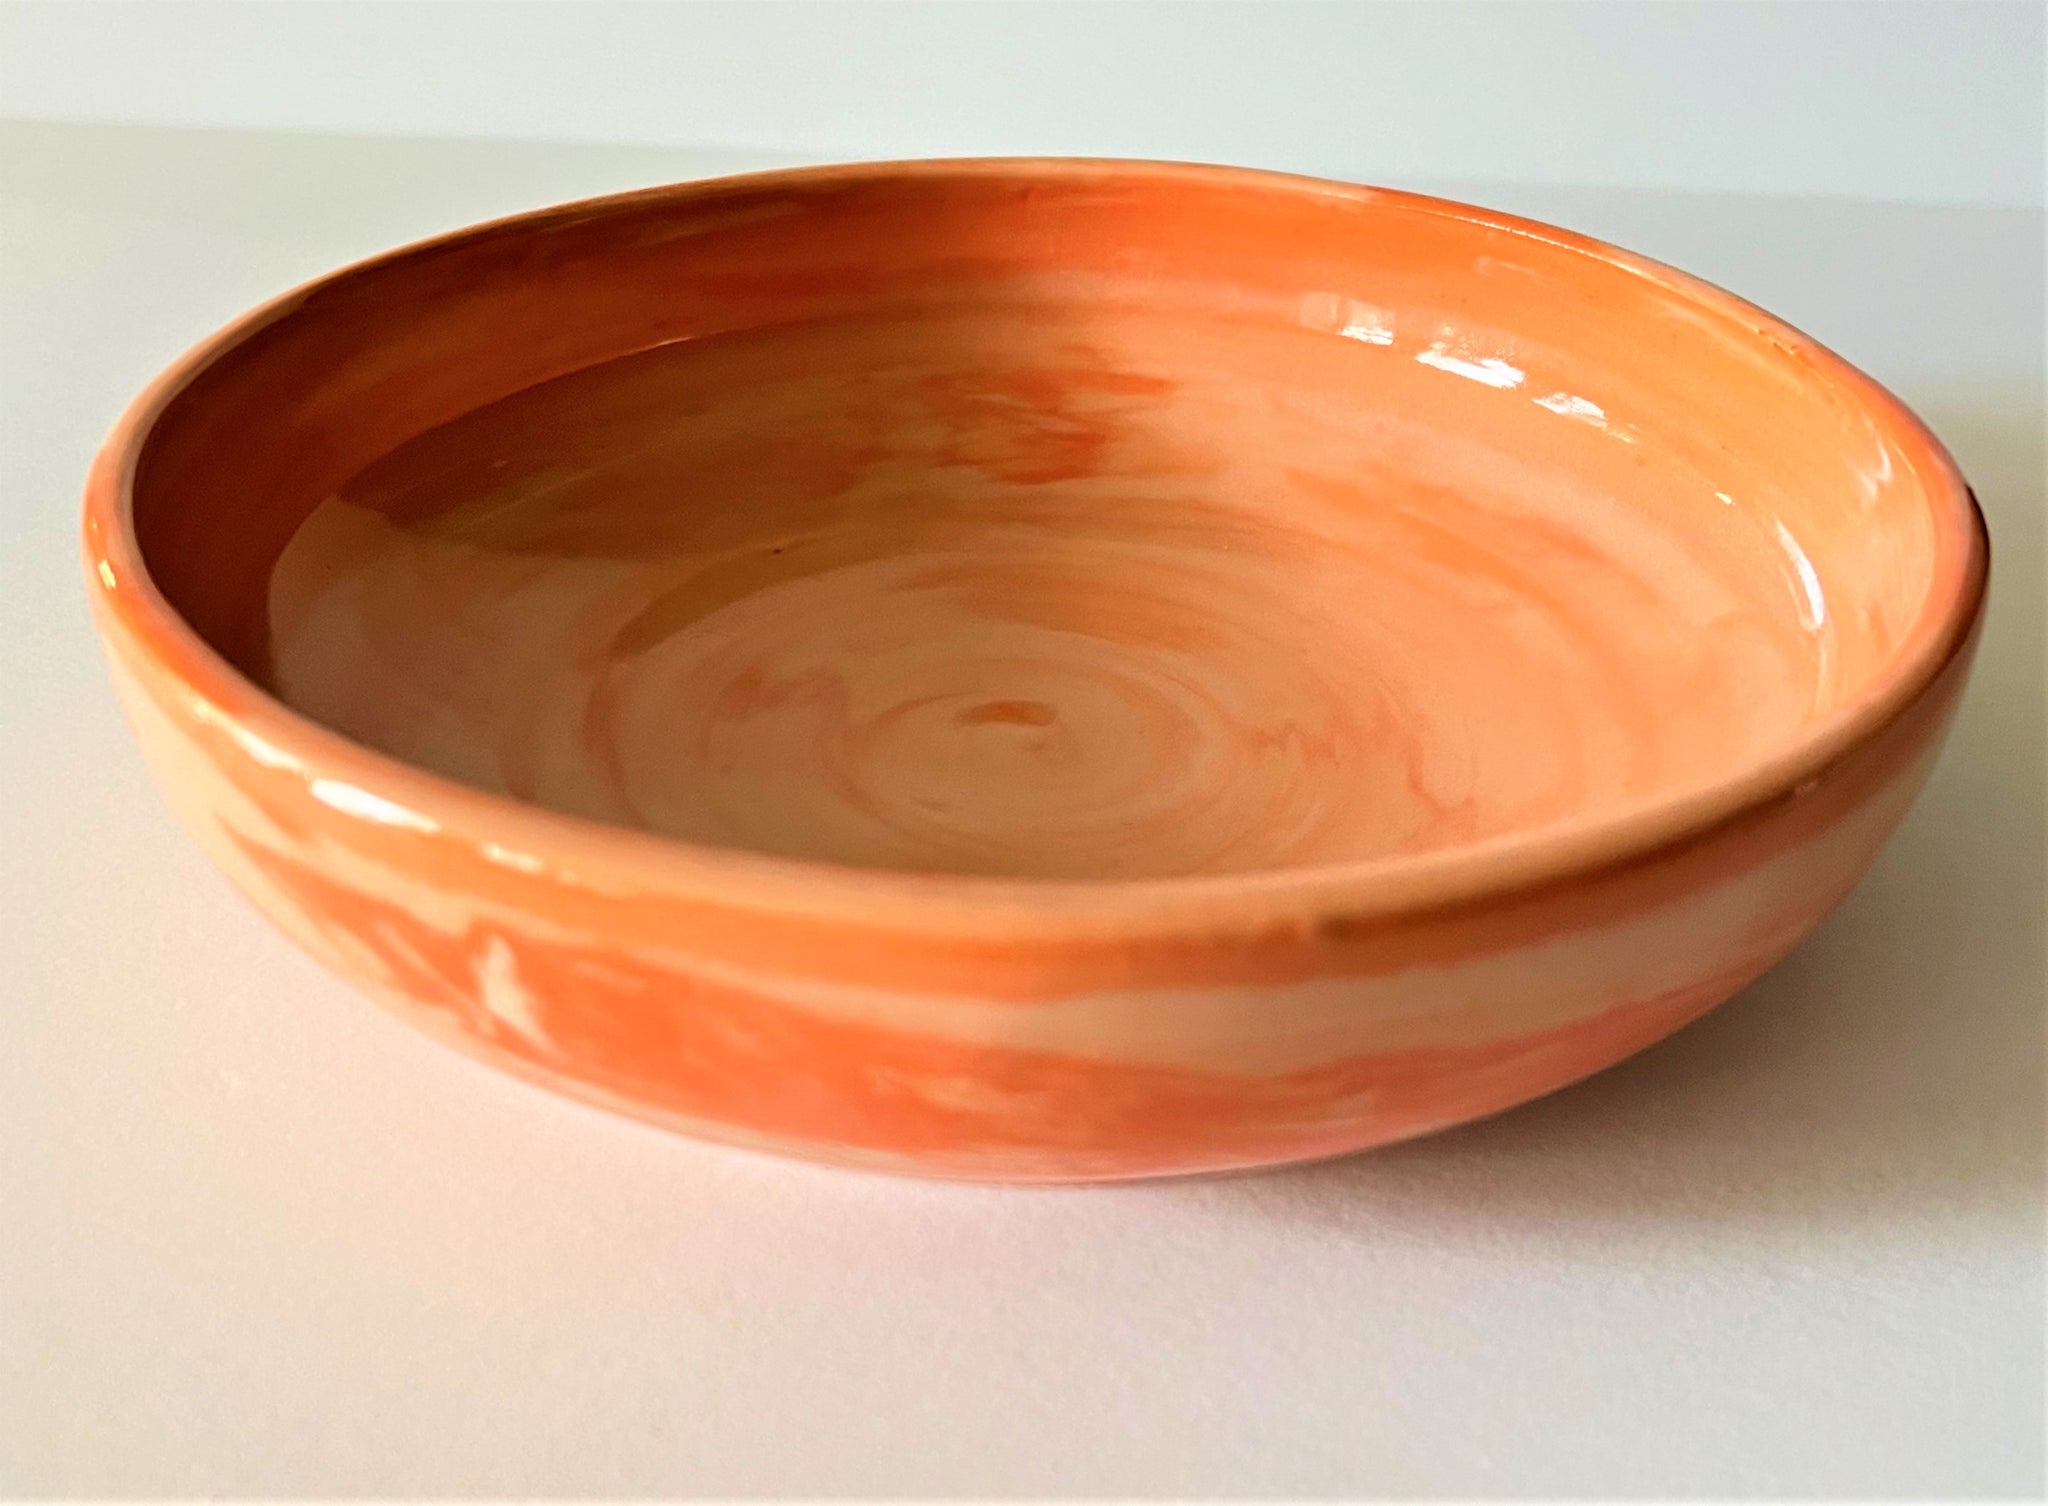 Ramen Bowl - Orange